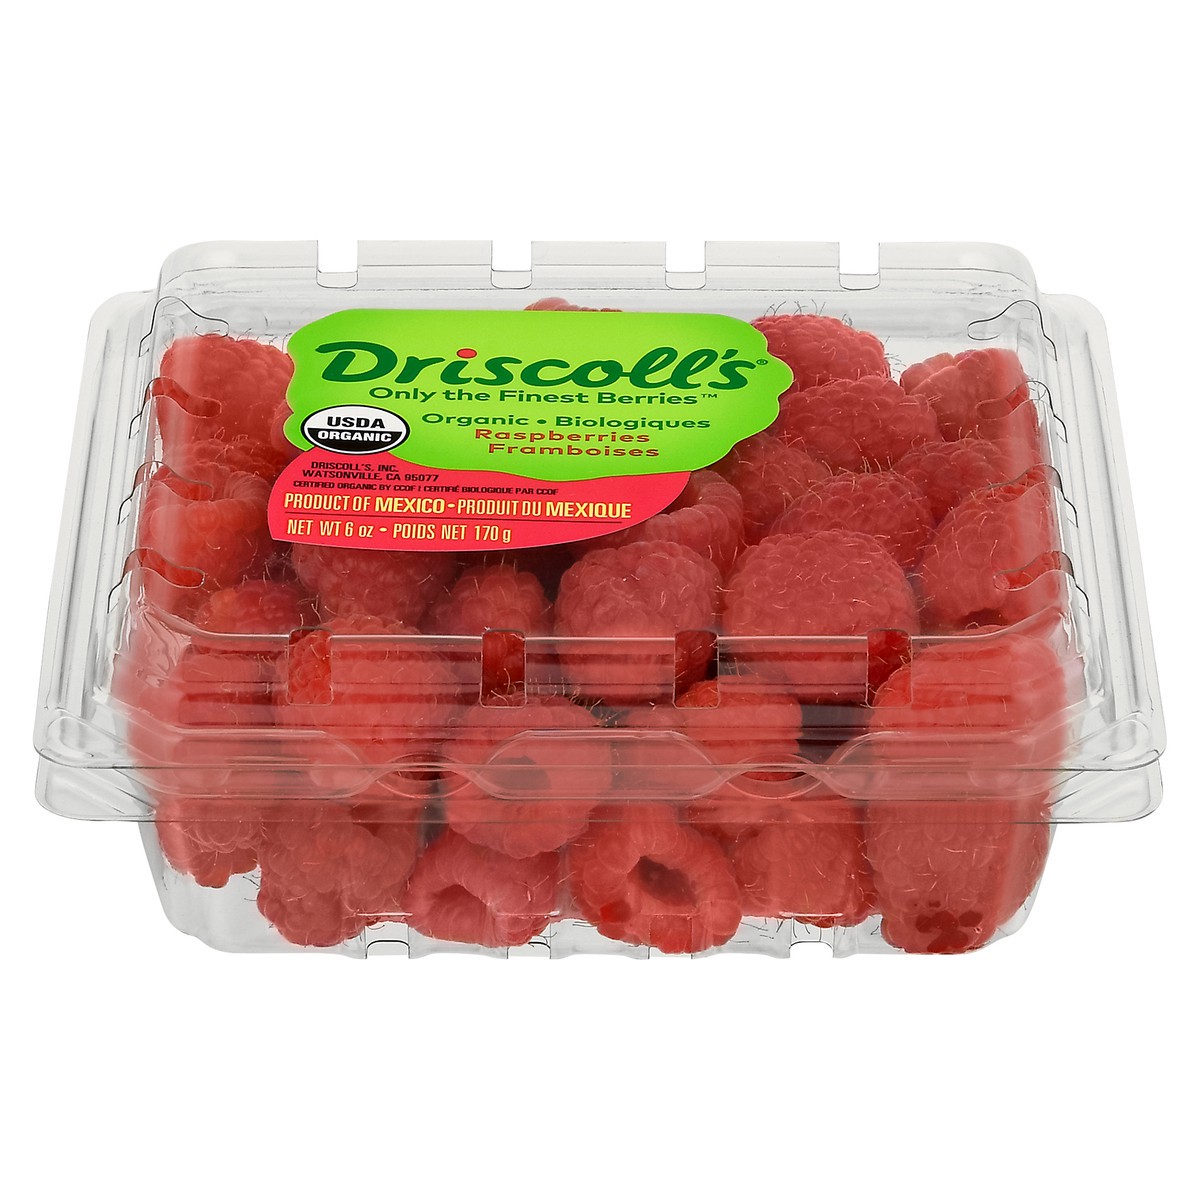 slide 2 of 14, Driscoll's Organic Raspberries, 6 oz